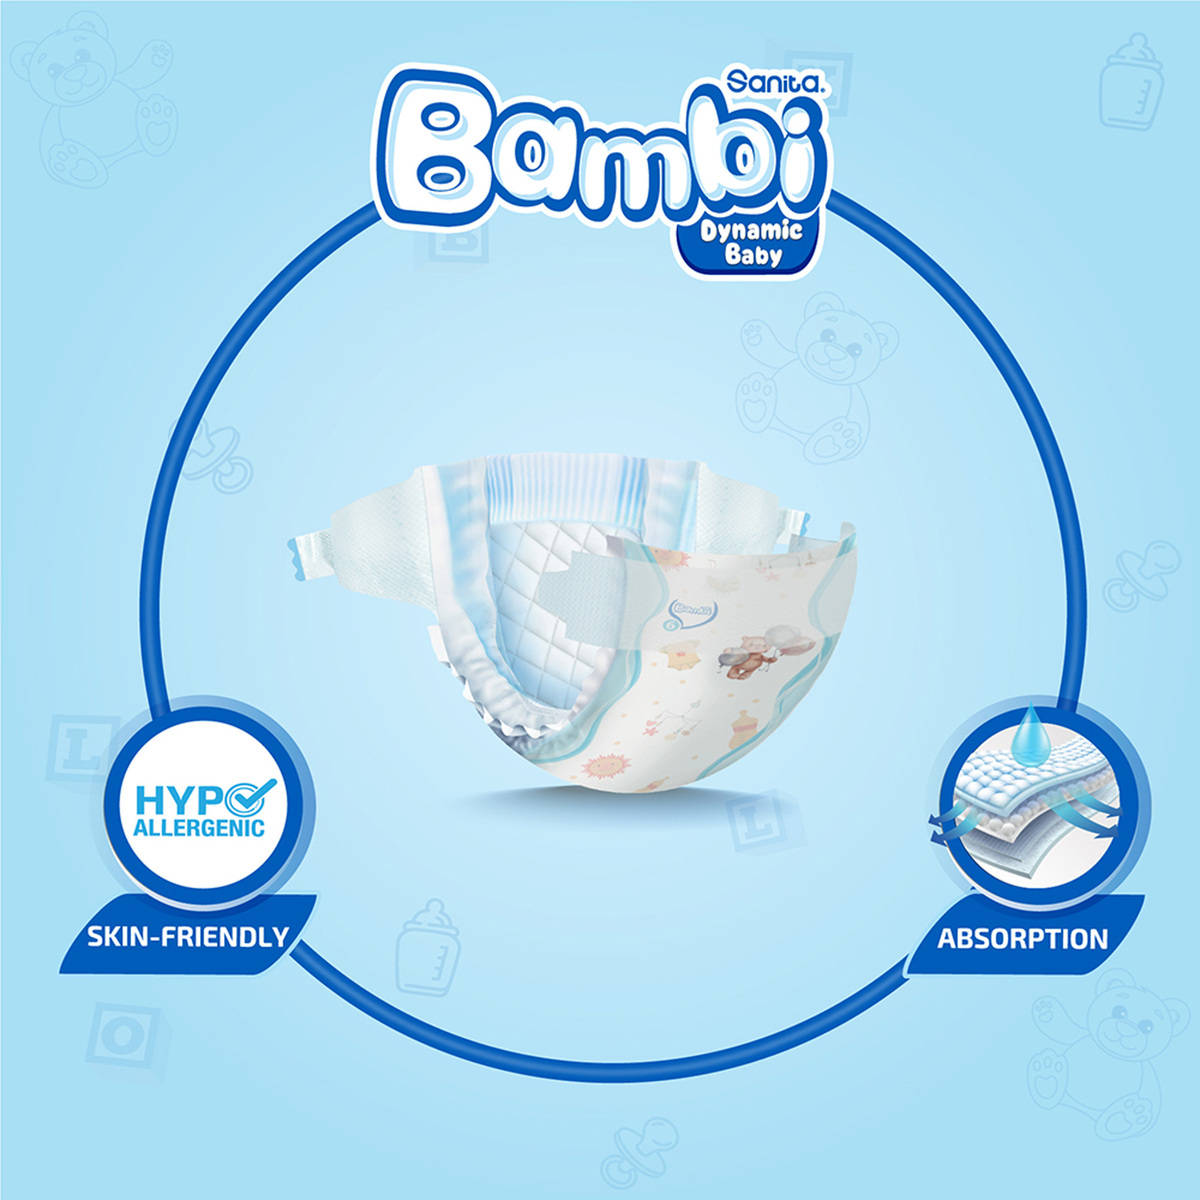 Sanita Bambi Baby Diaper Value Pack Size 6 XX-Large 16+kg 21 pcs